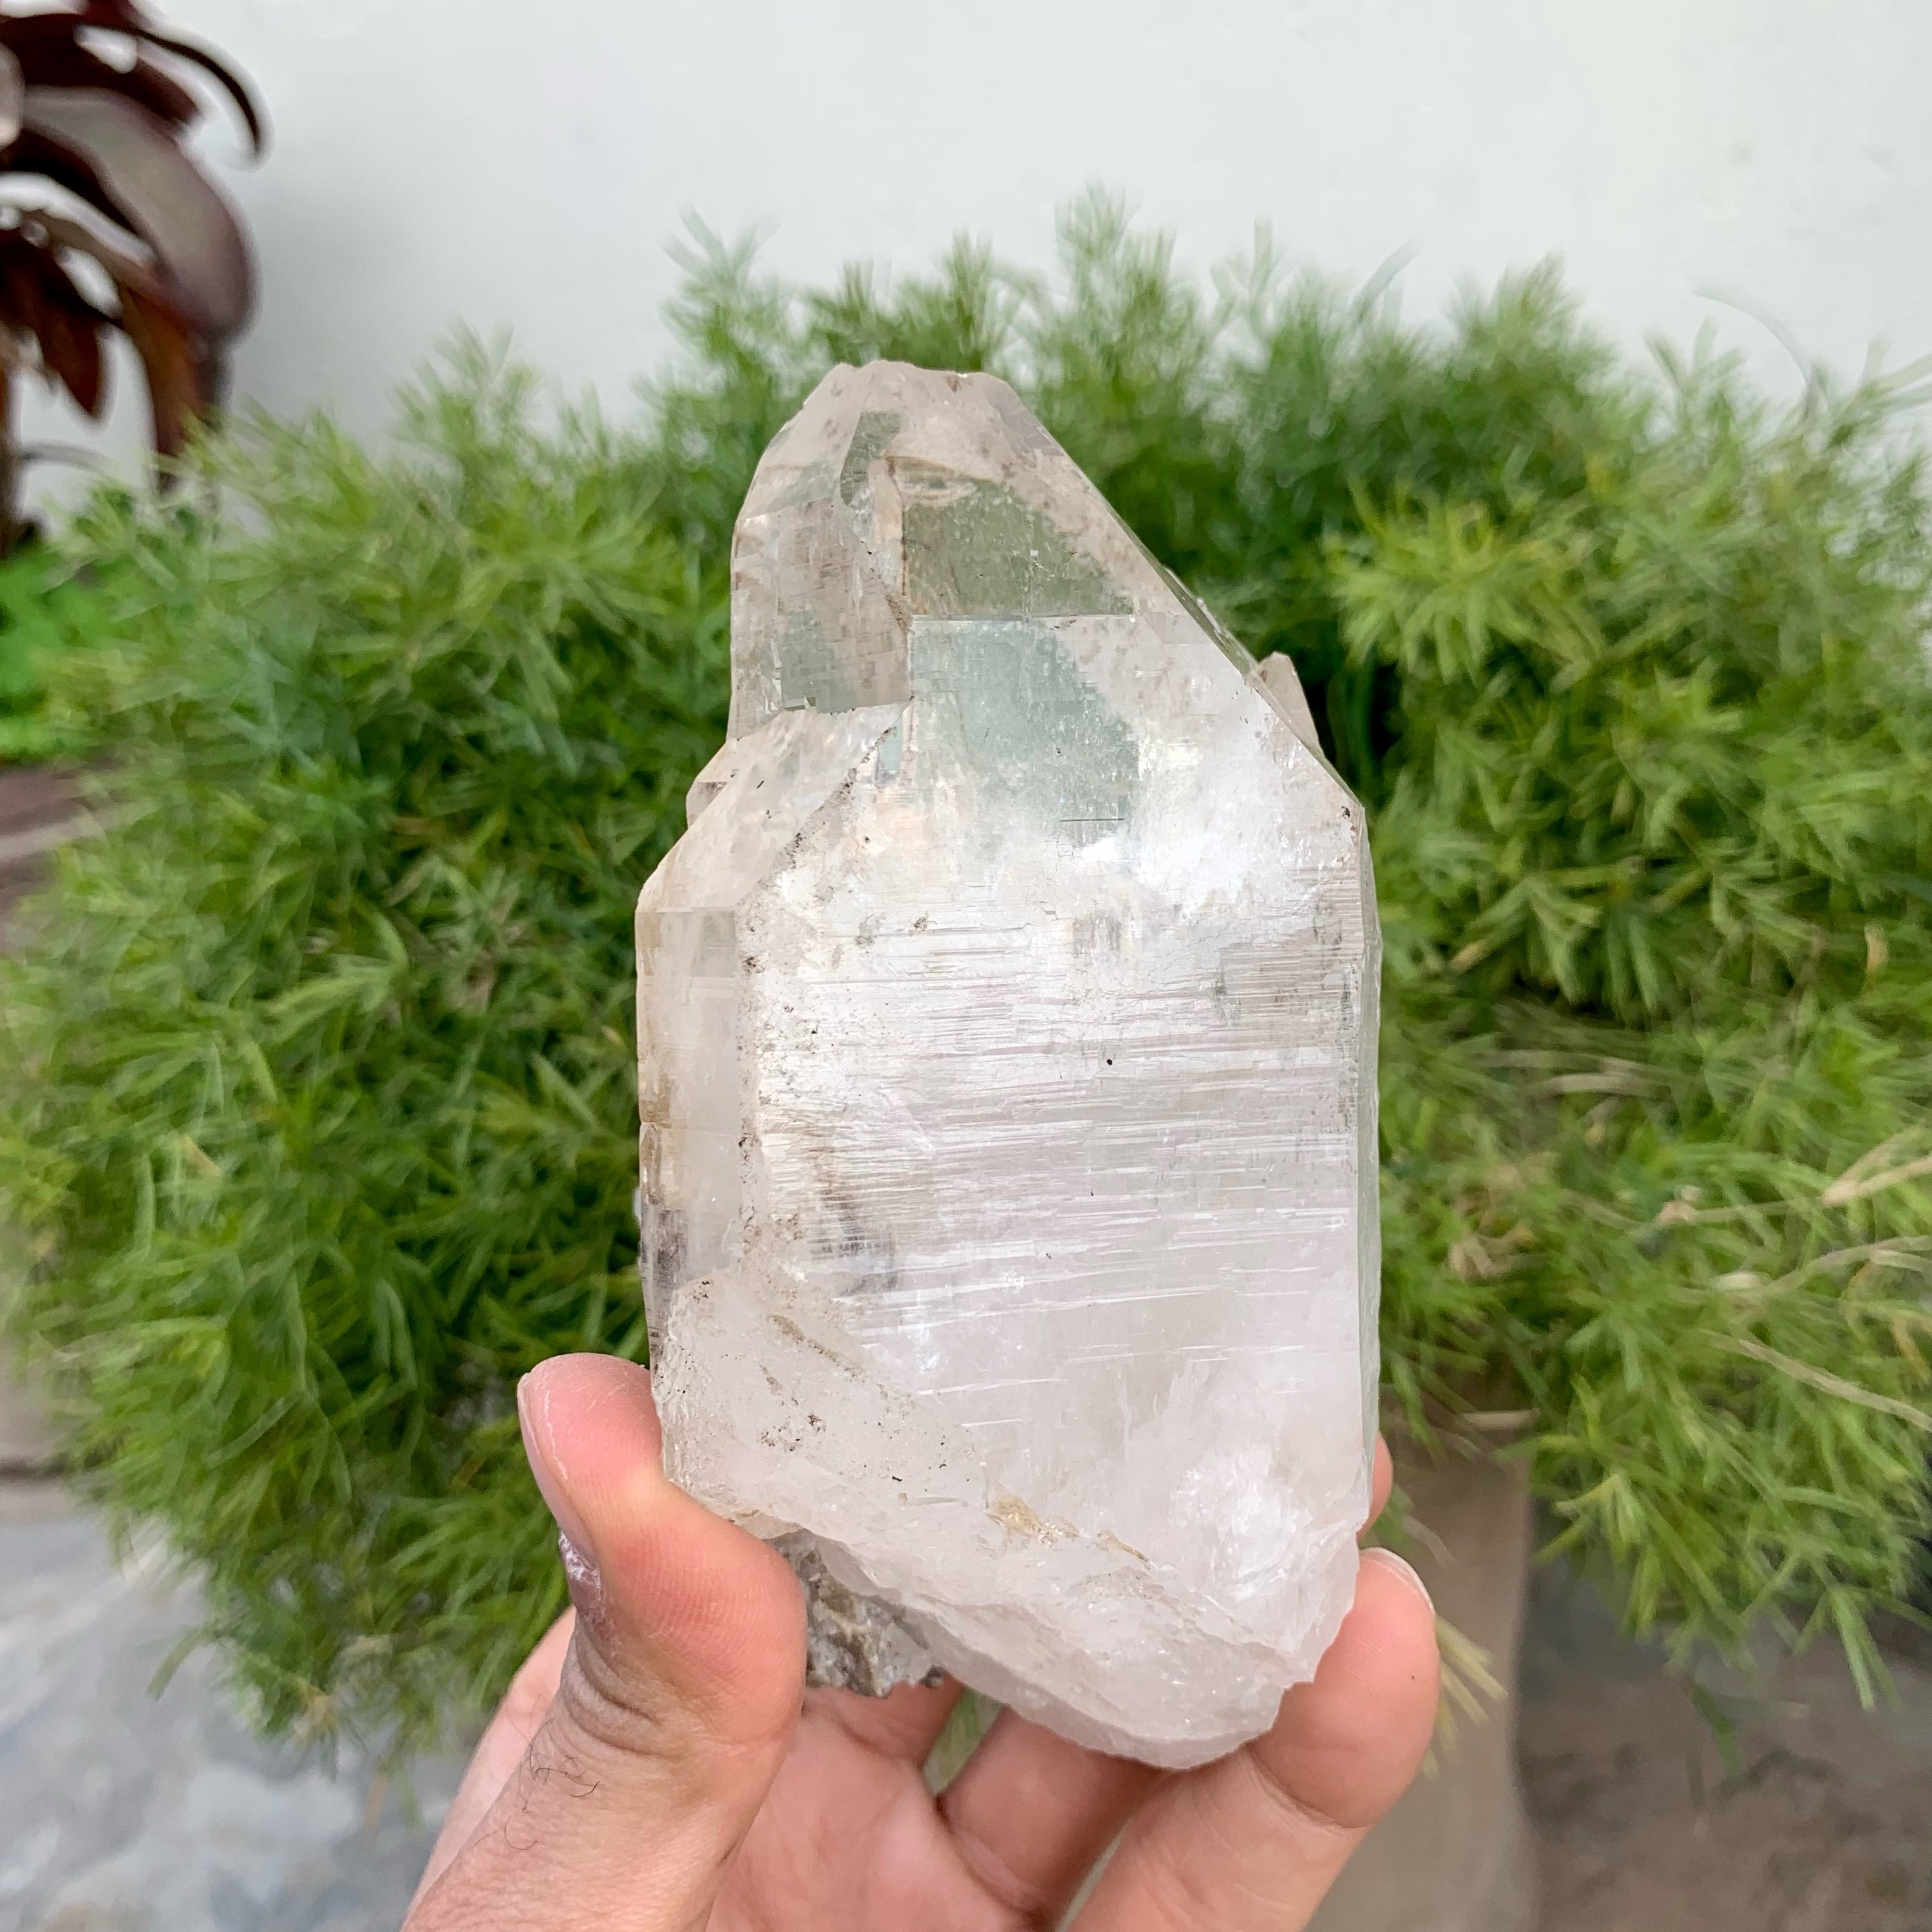 Impressive Quartz Crystal With Excellent Transparency And Matrix